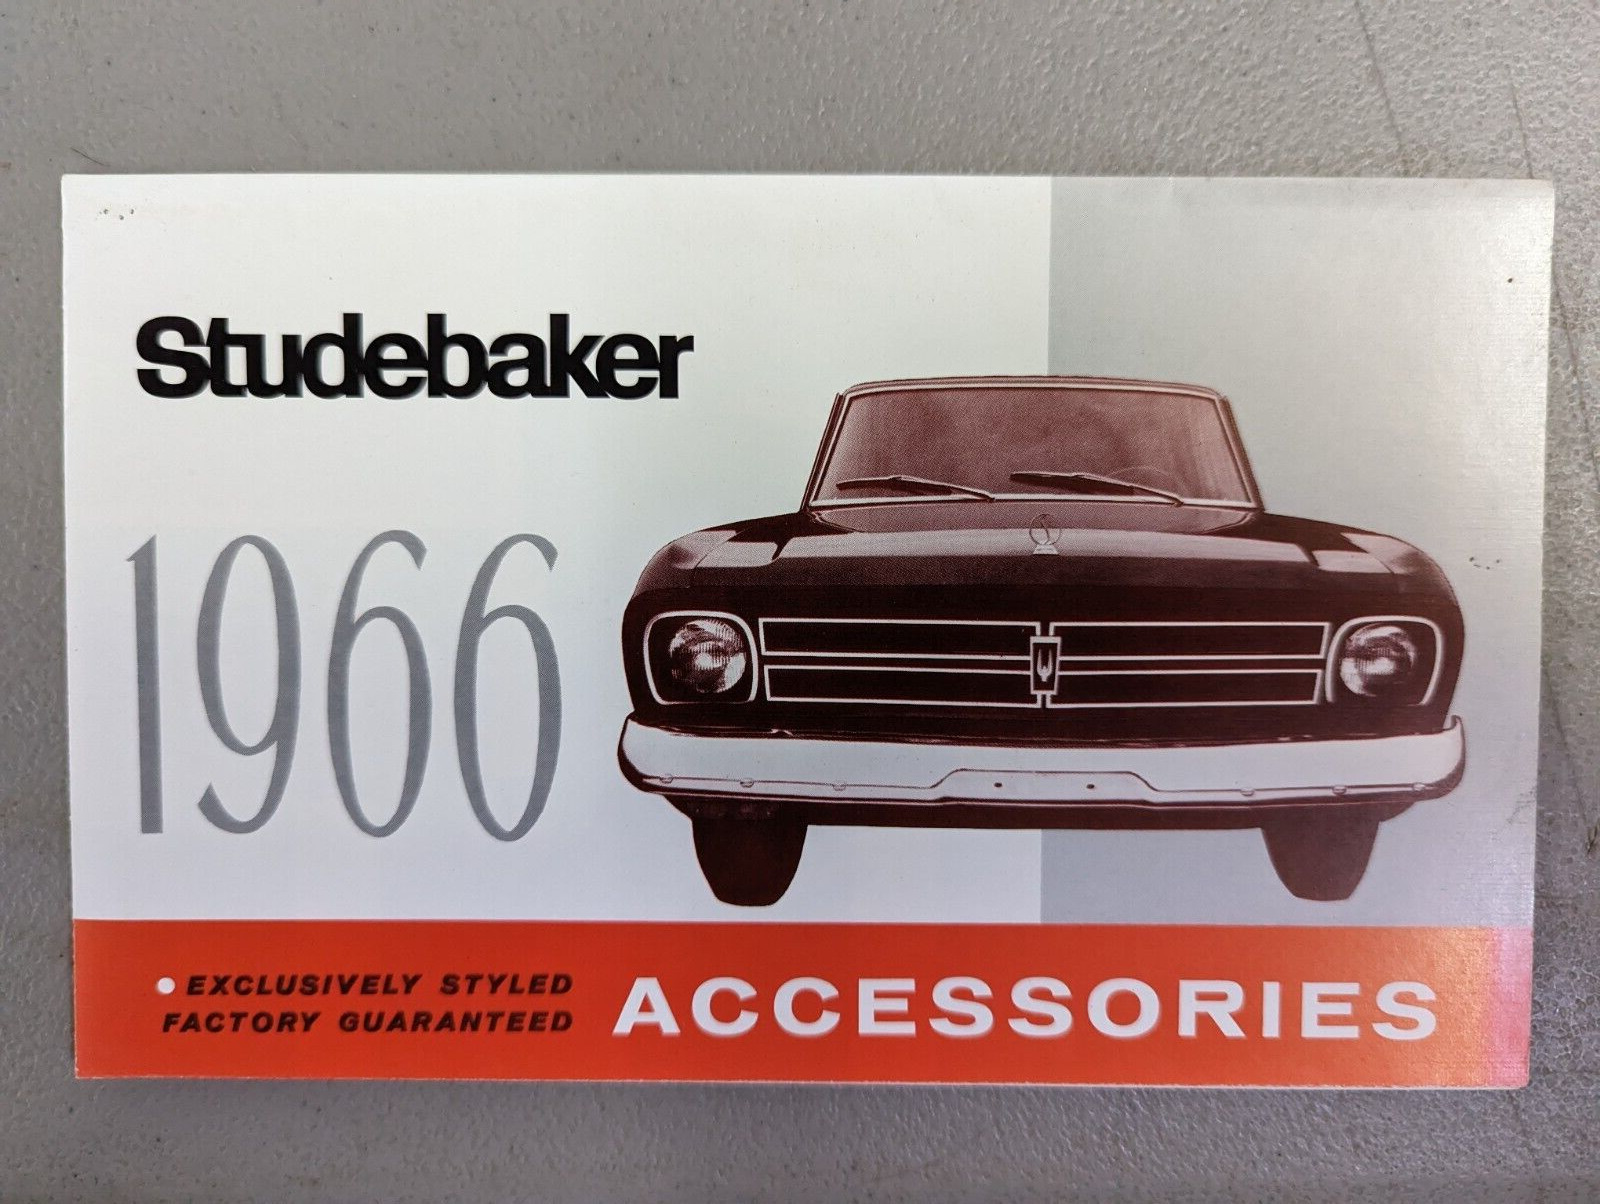 1966 Studebaker Accessory Booklet